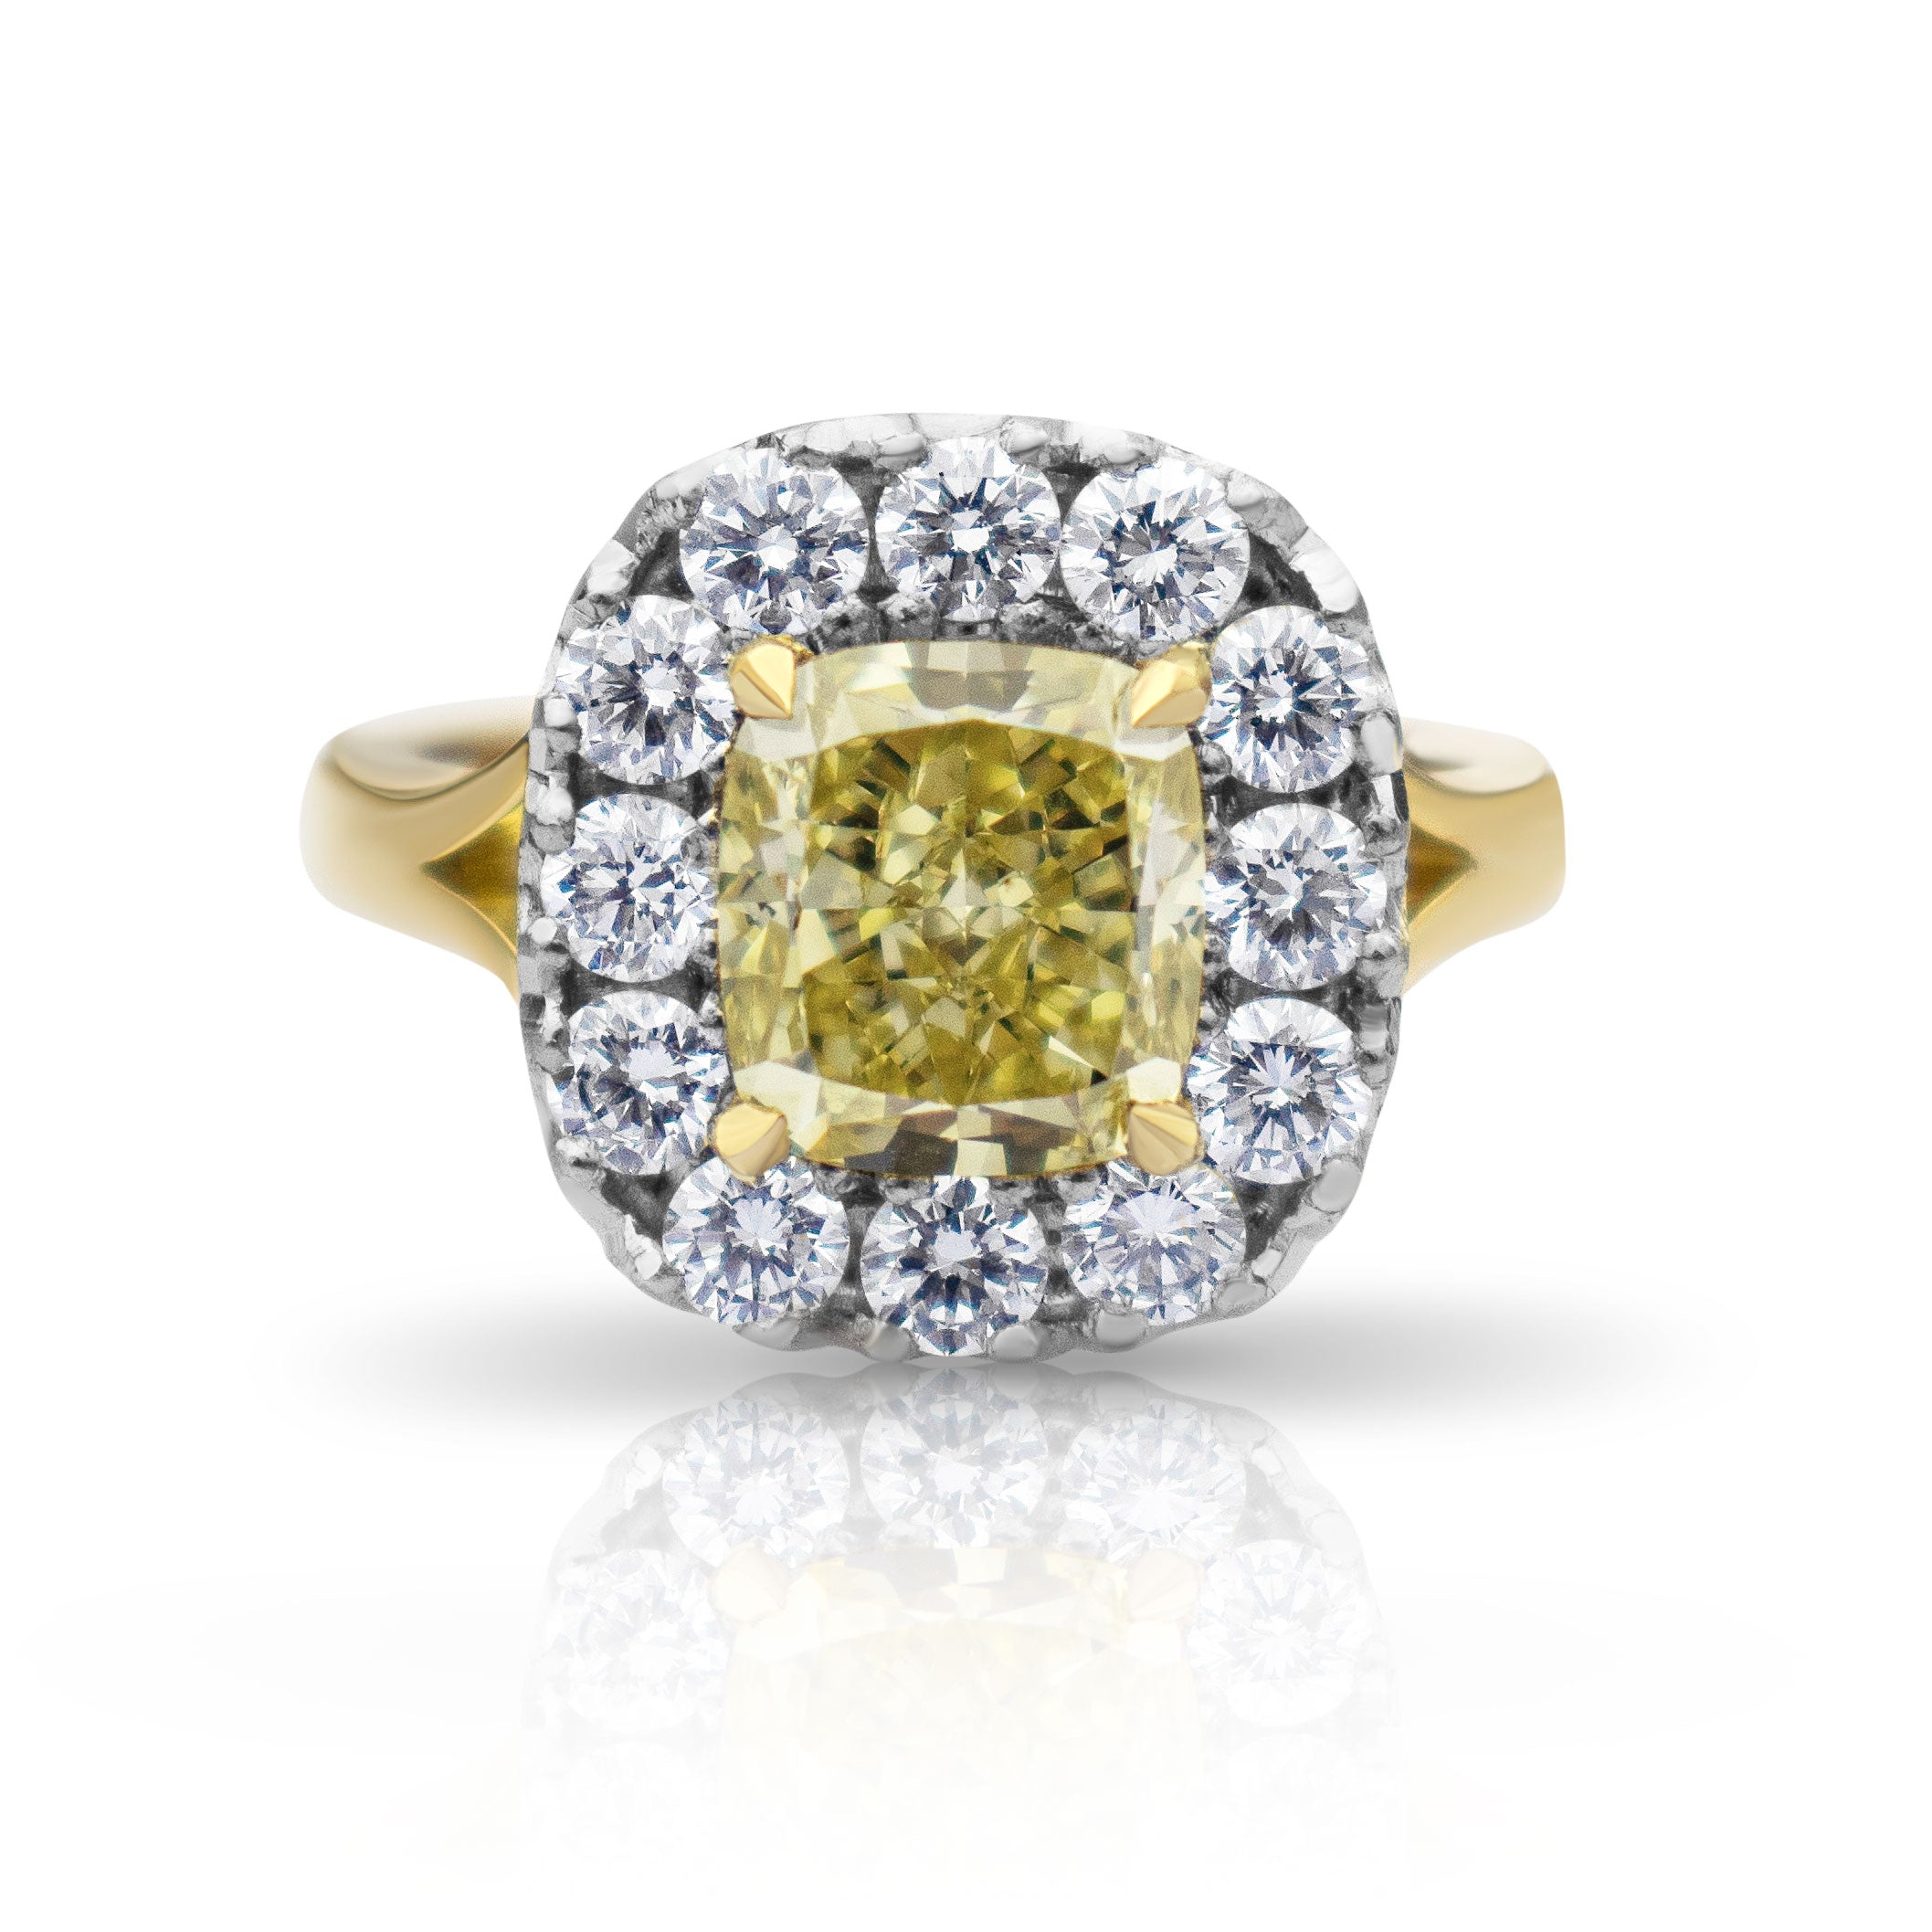 Fancy yellow diamond engagement ring. Serena Ansell bespoke engagement ring design. Serena Ansell Bespoke Jewellery Design. Bespoke engagement ring designer London. 